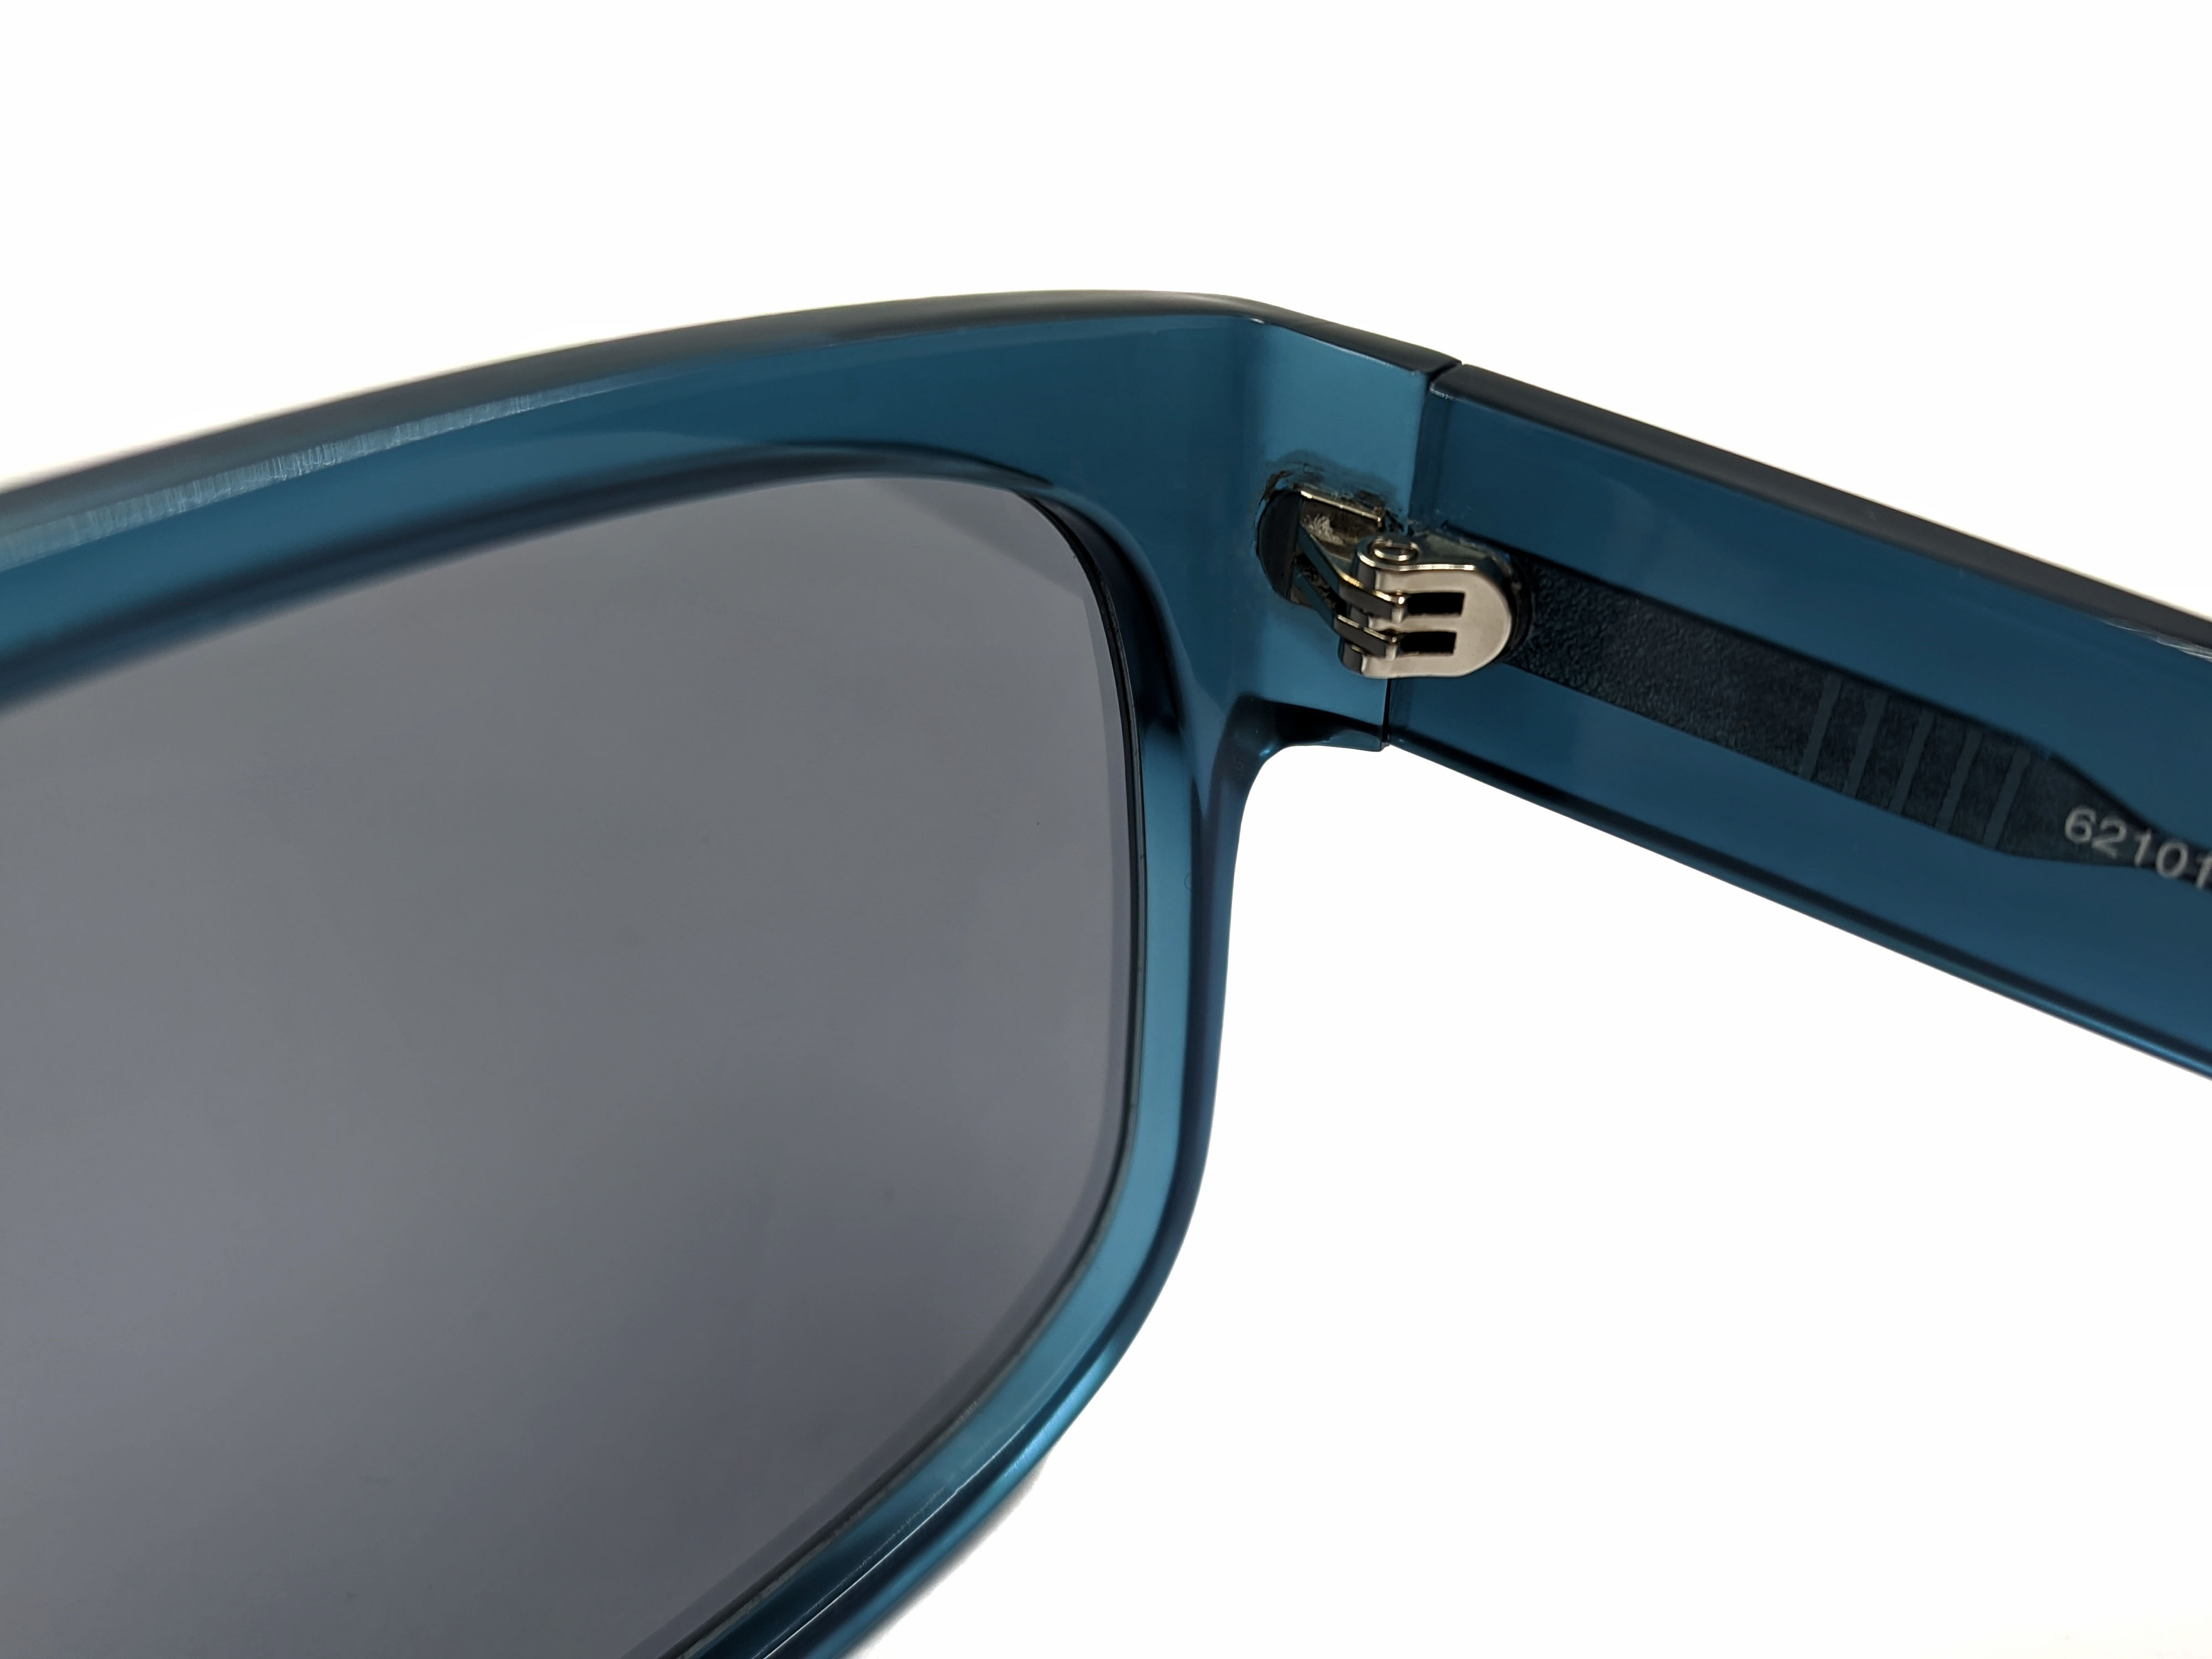 Lunettes-soleil Homme Blue Mens Square Oversized Sunglasses Glasses Frames River Shades Sunglass Men